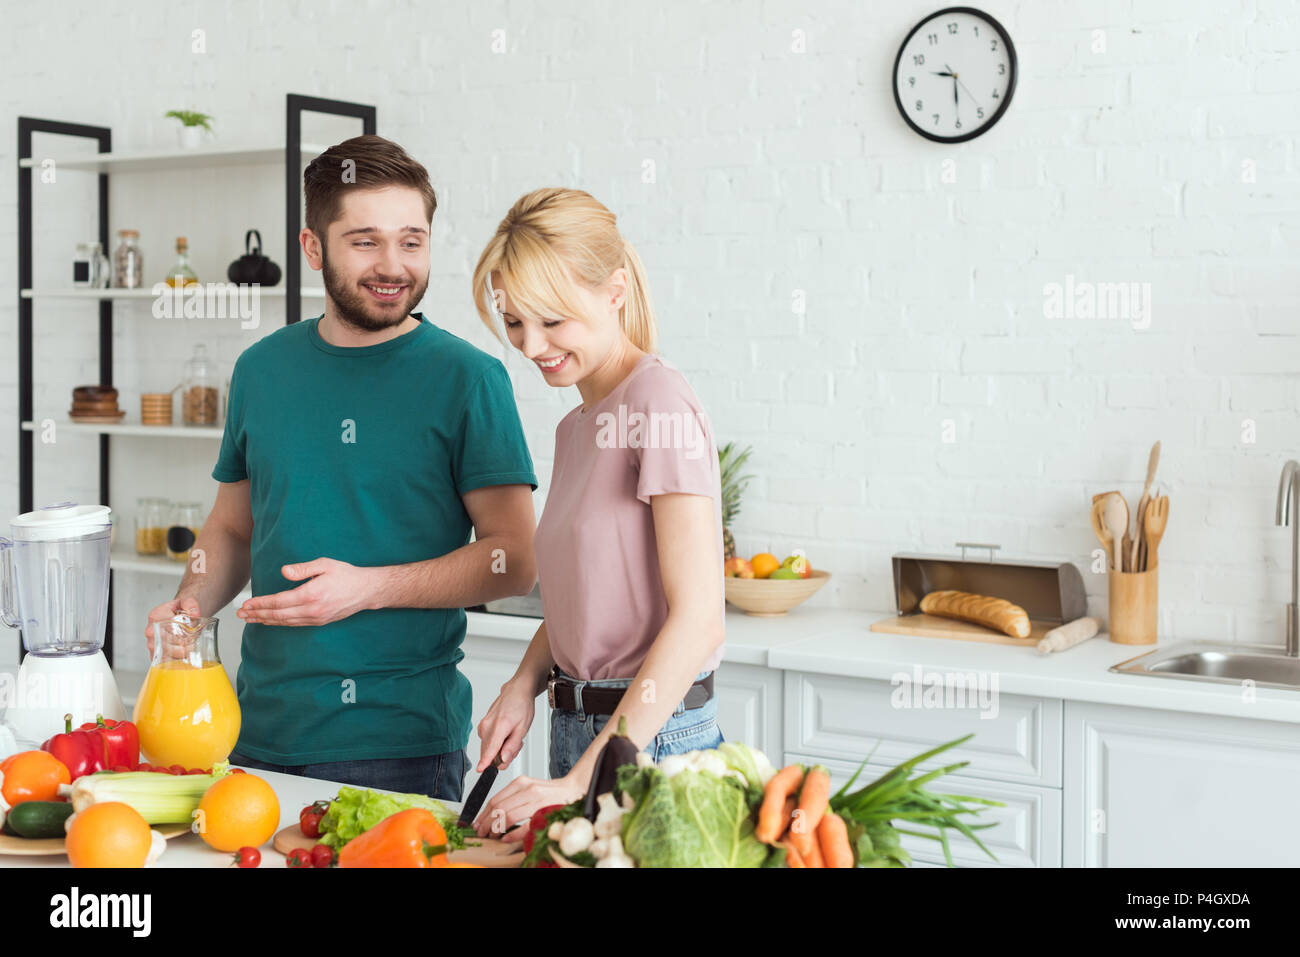 smiling couple of vegans preparing food at kitchen Stock Photo